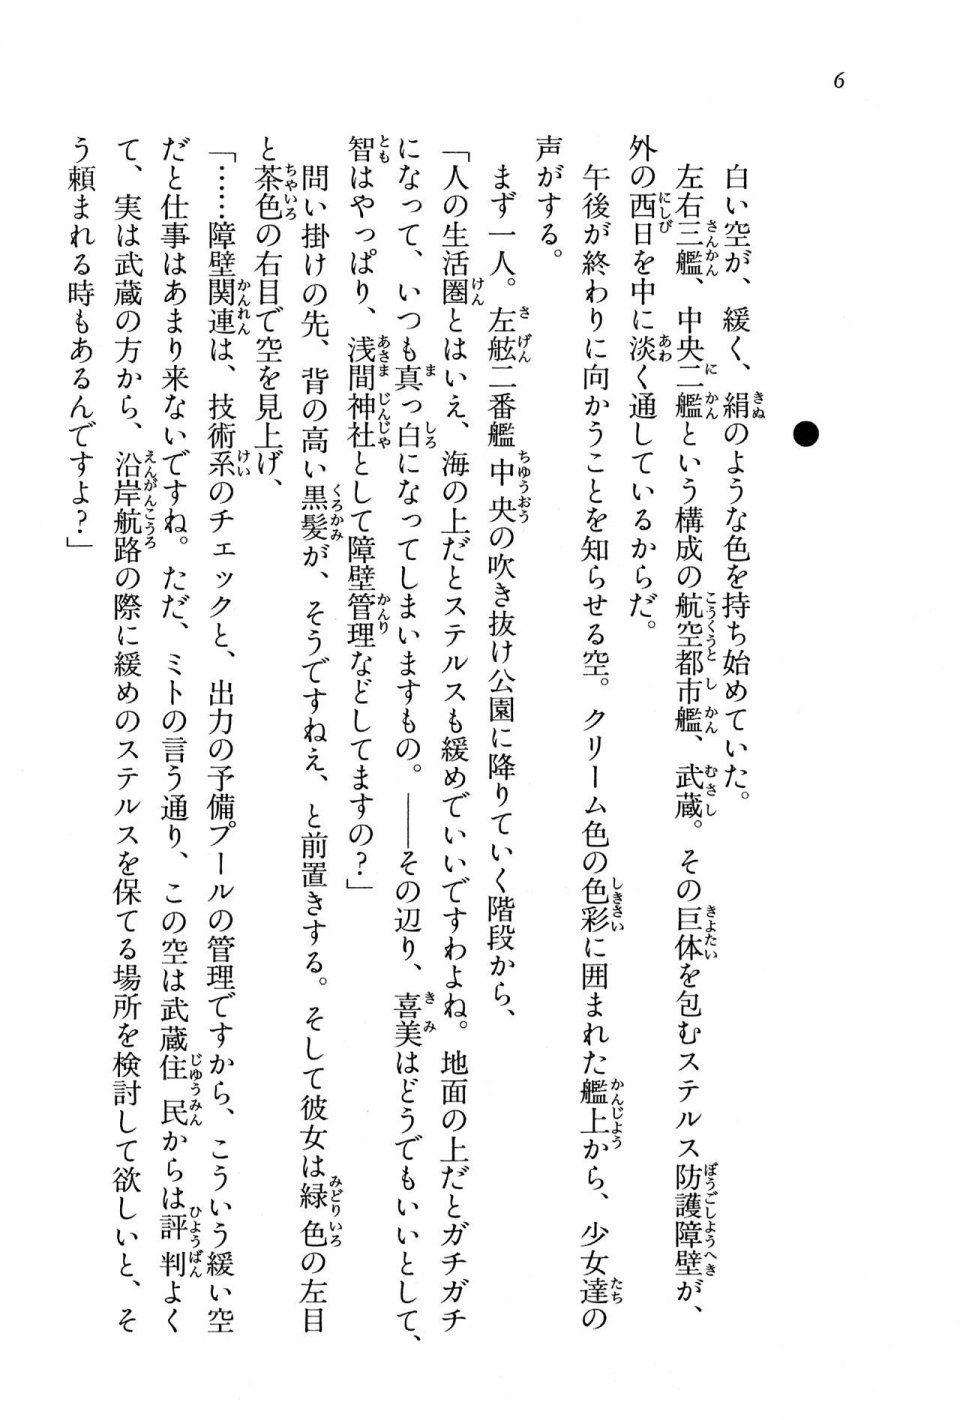 Kyoukai Senjou no Horizon BD Special Mininovel Vol 3(2A) - Photo #10